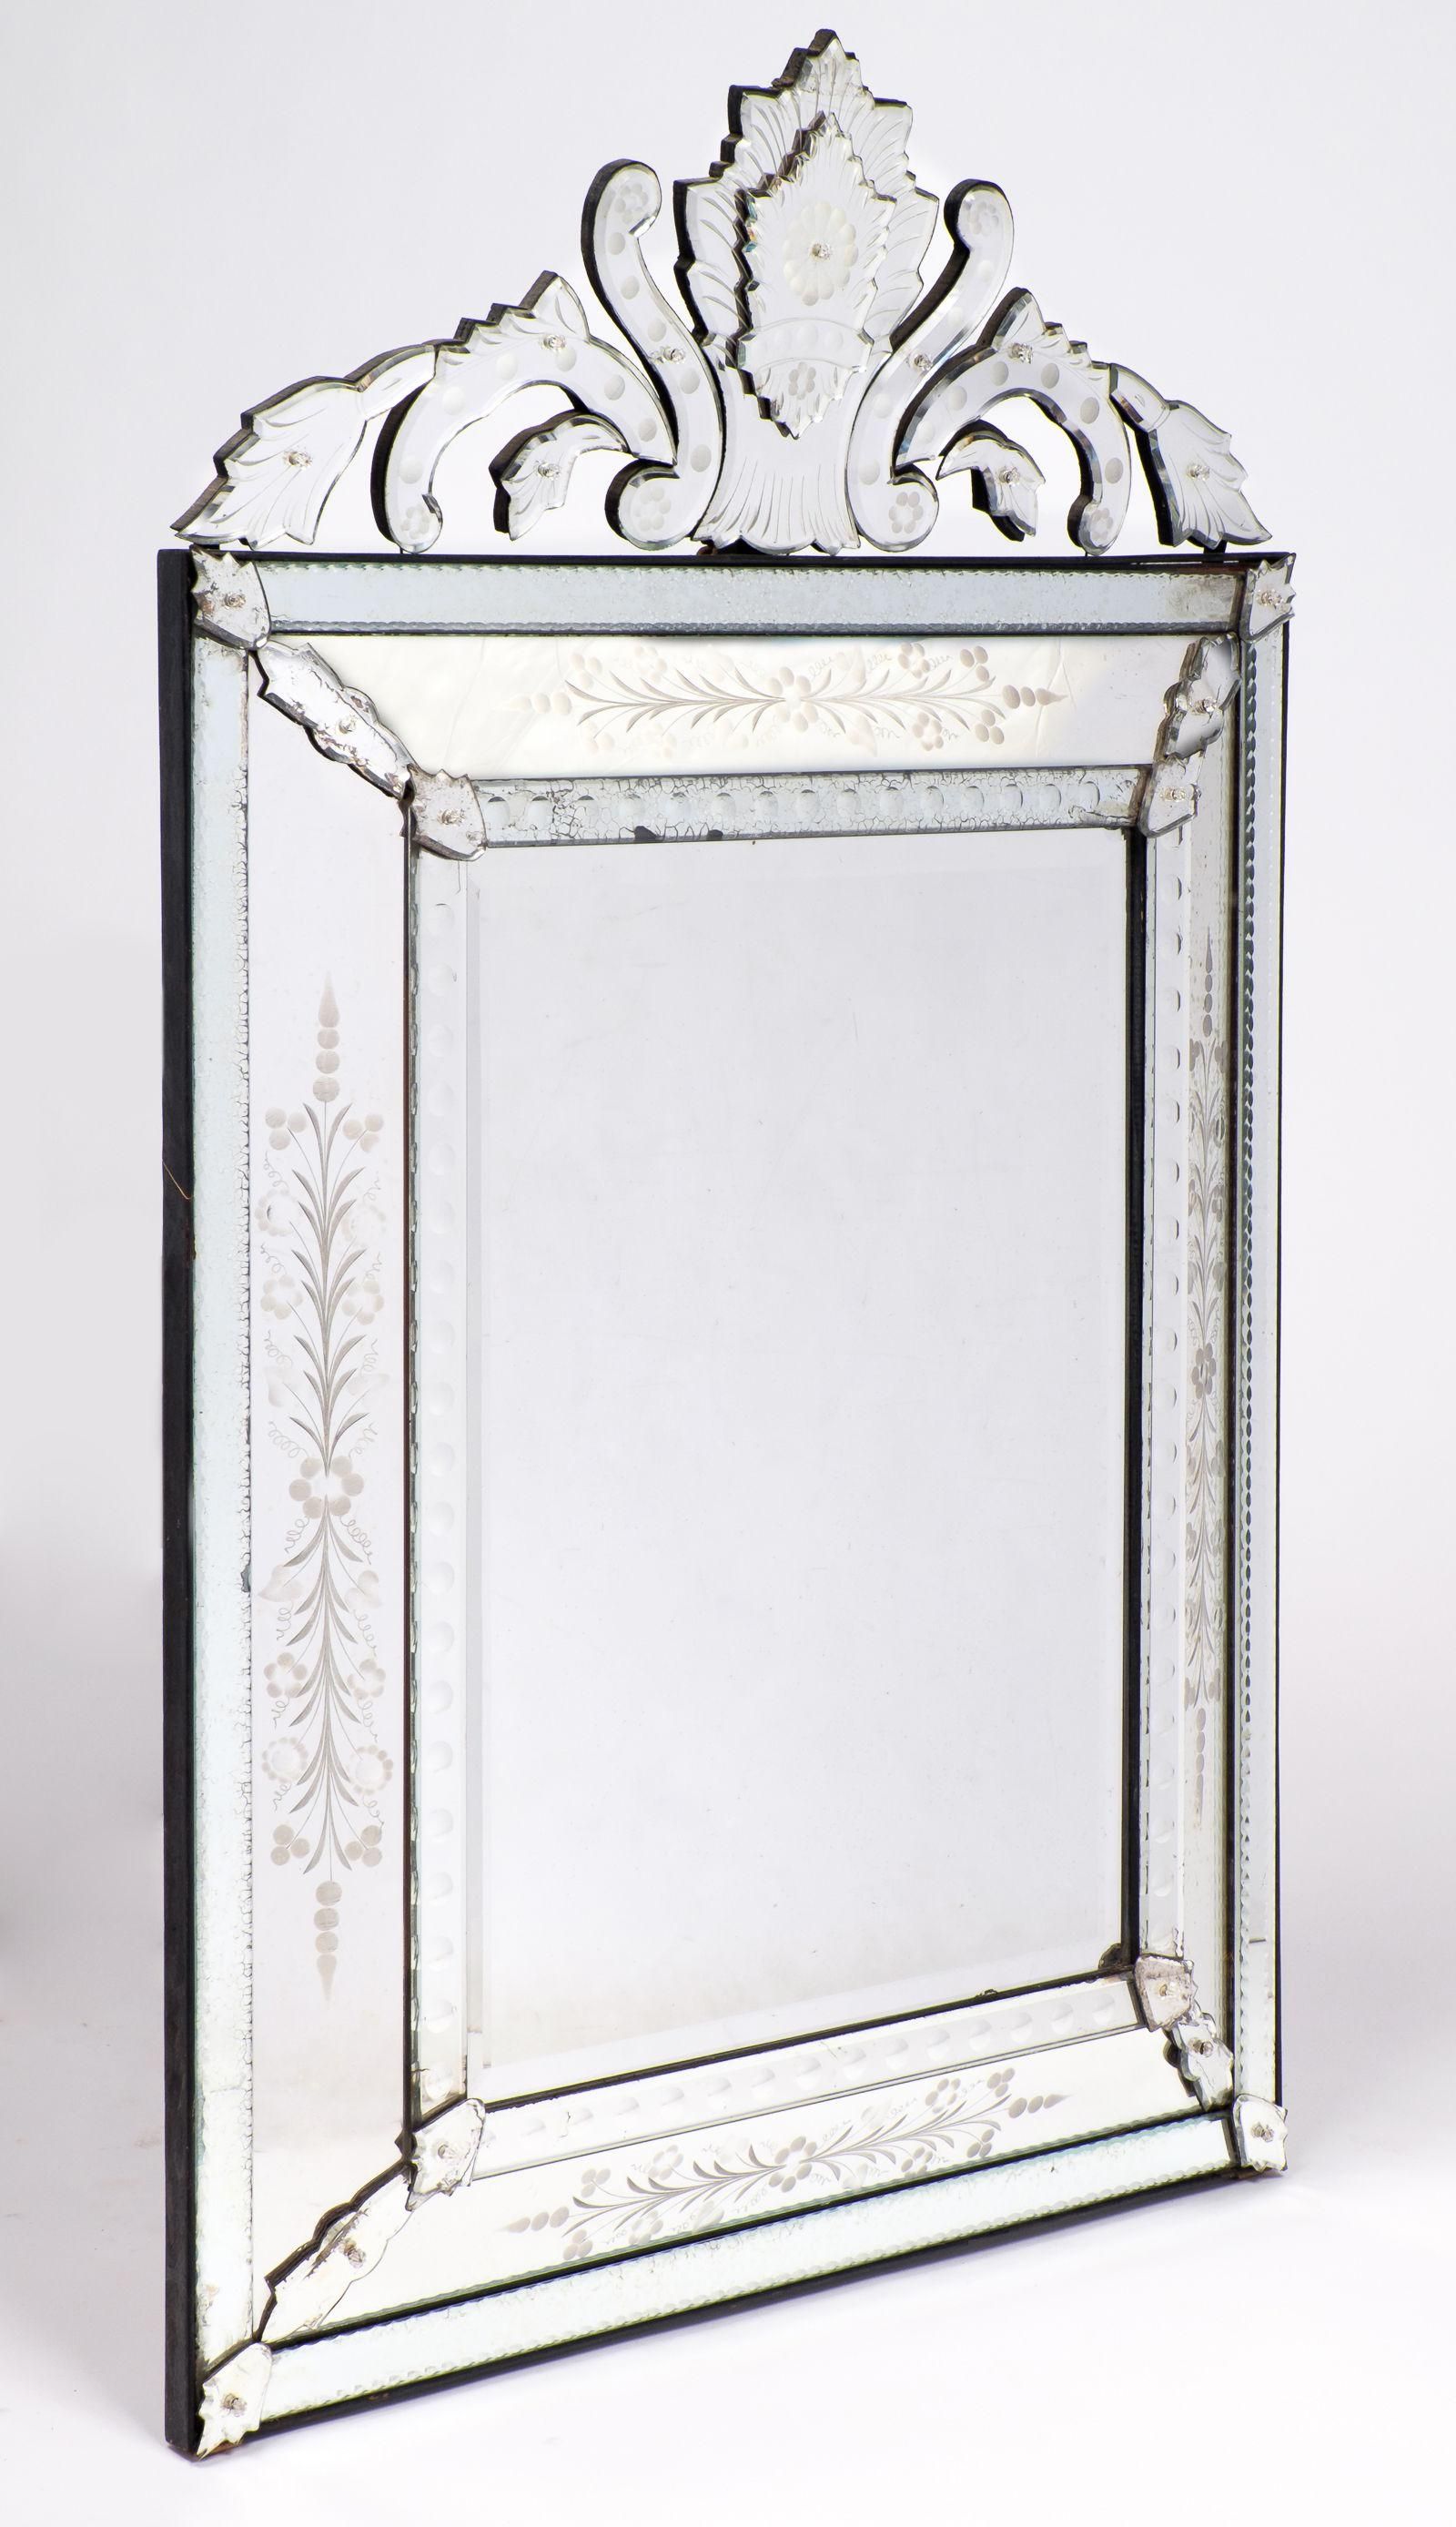 Antique Venetian Glass Mantel Mirror – Jean Marc Fray With Regard To Antique Venetian Glass Mirror (View 18 of 20)